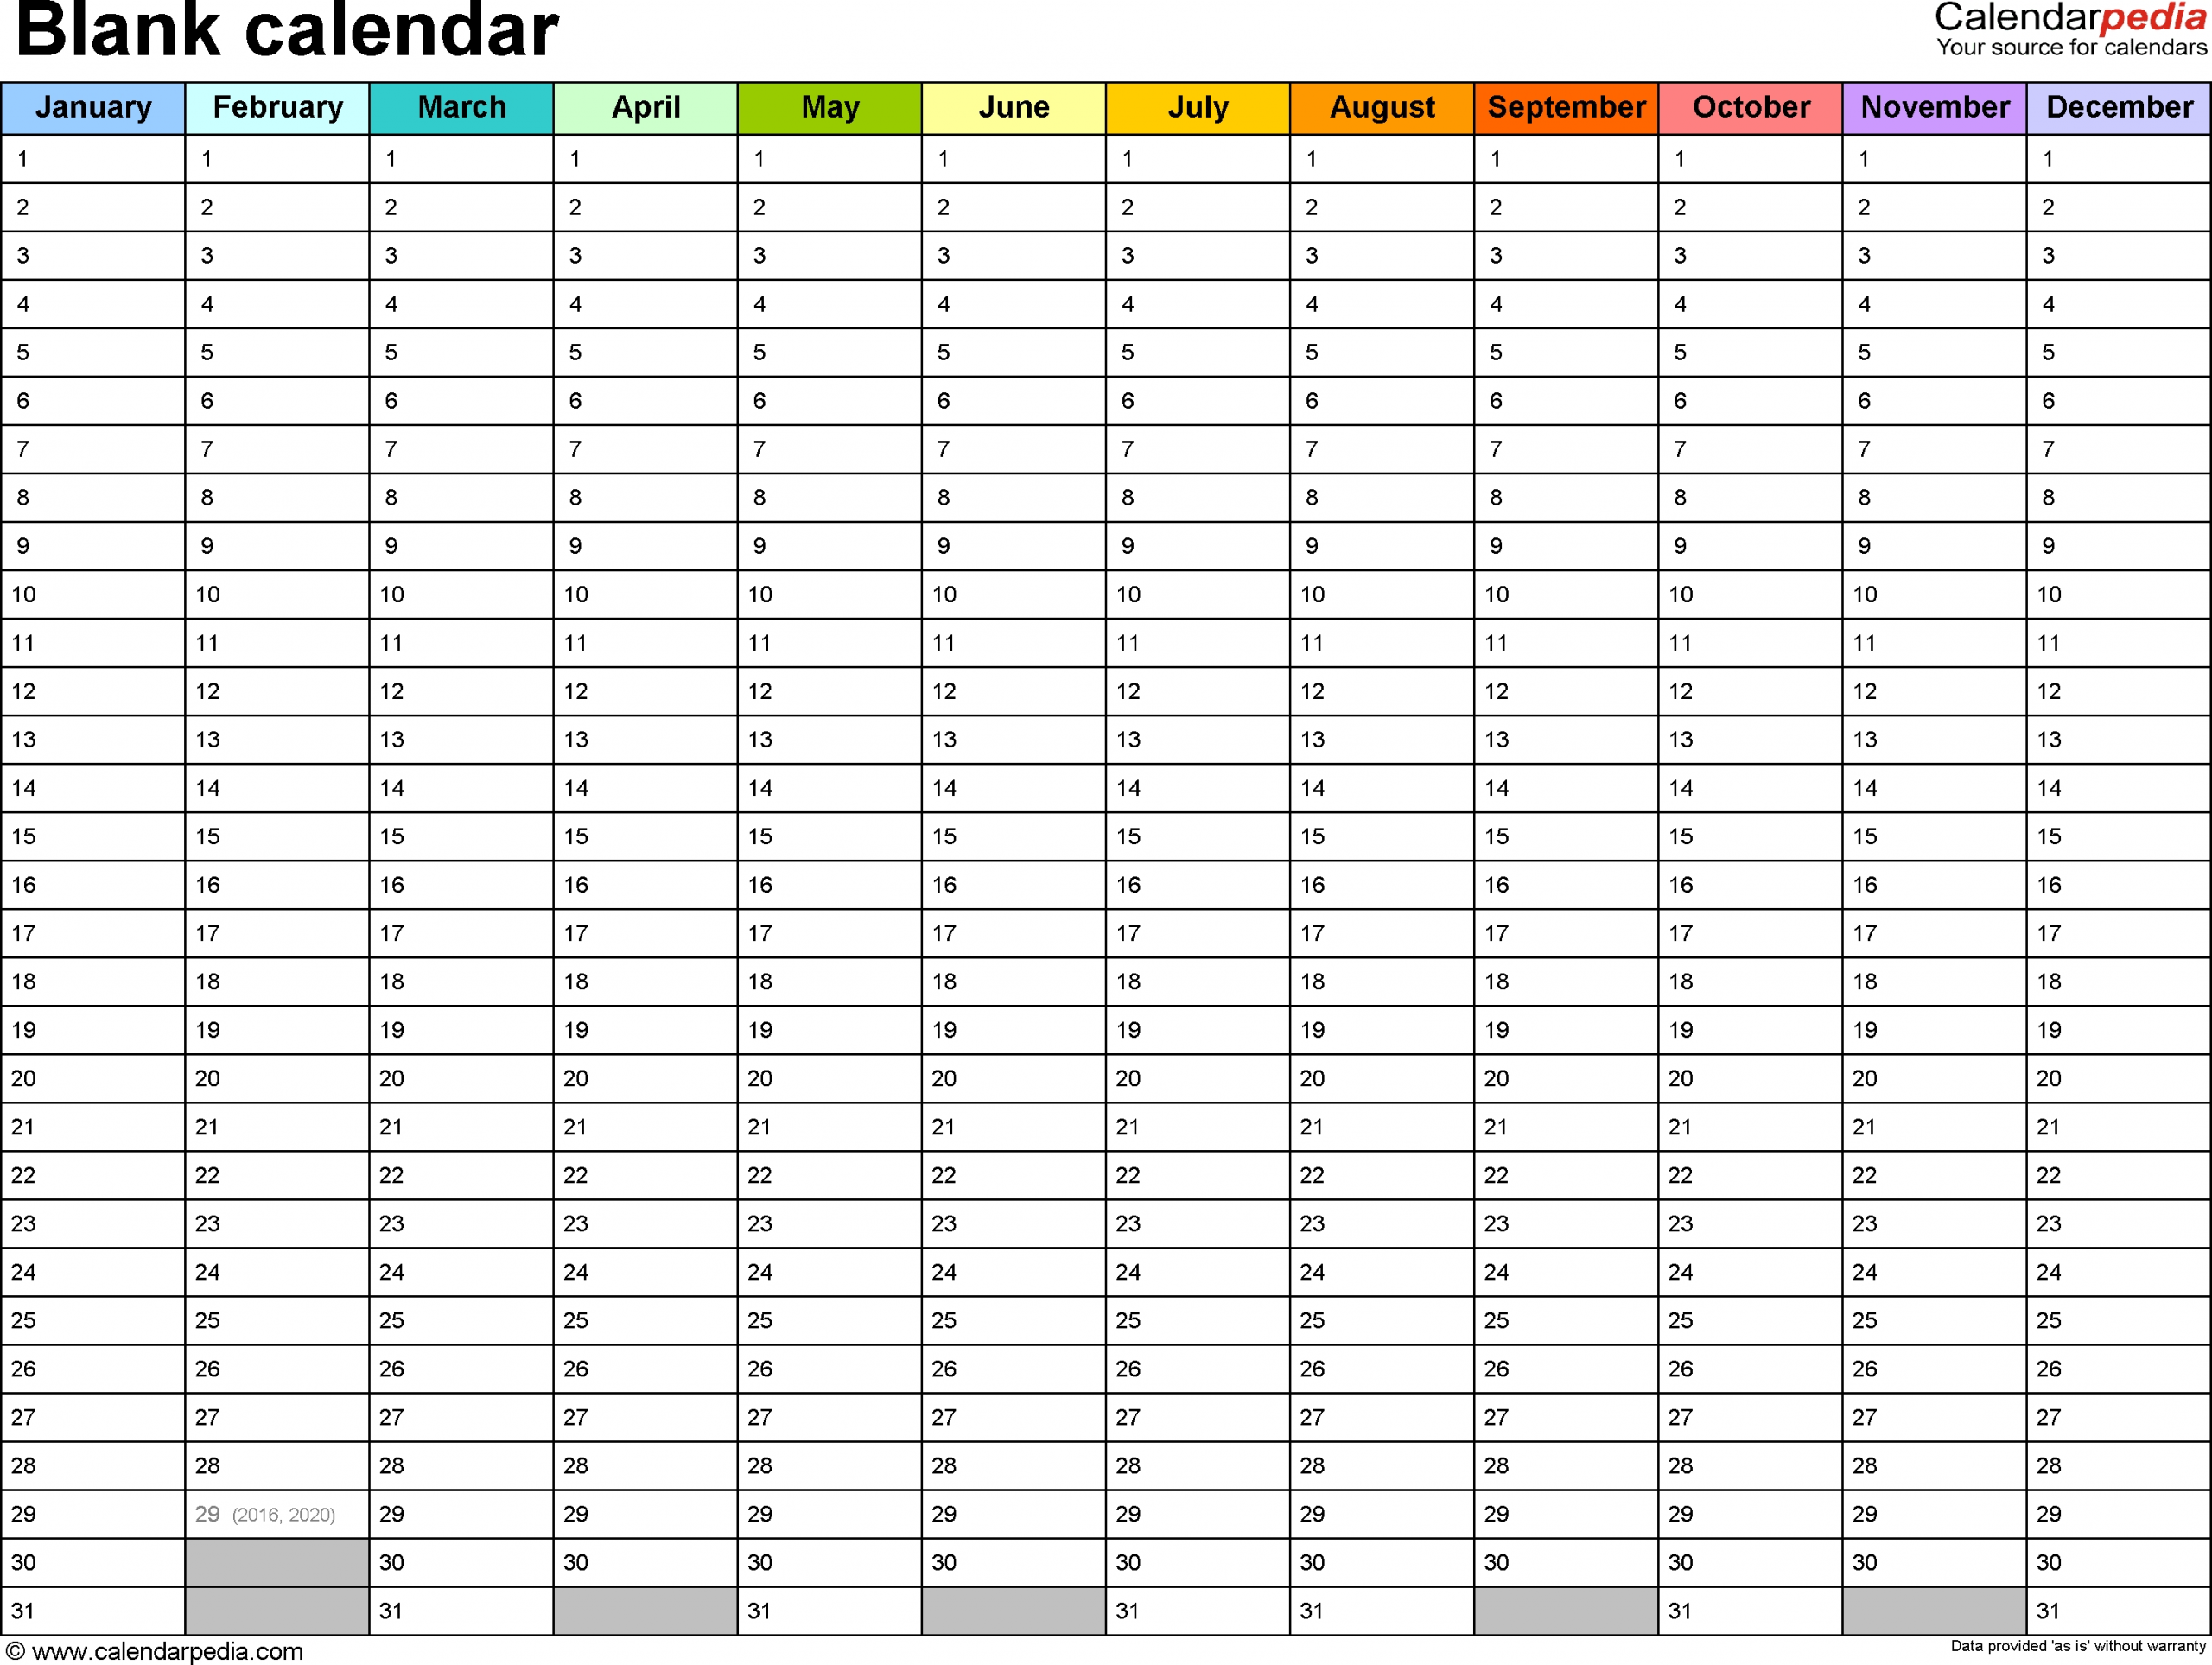 Blank Calendar - 9 Free Printable Microsoft Word Templates regarding 3 Months In One Calenadar